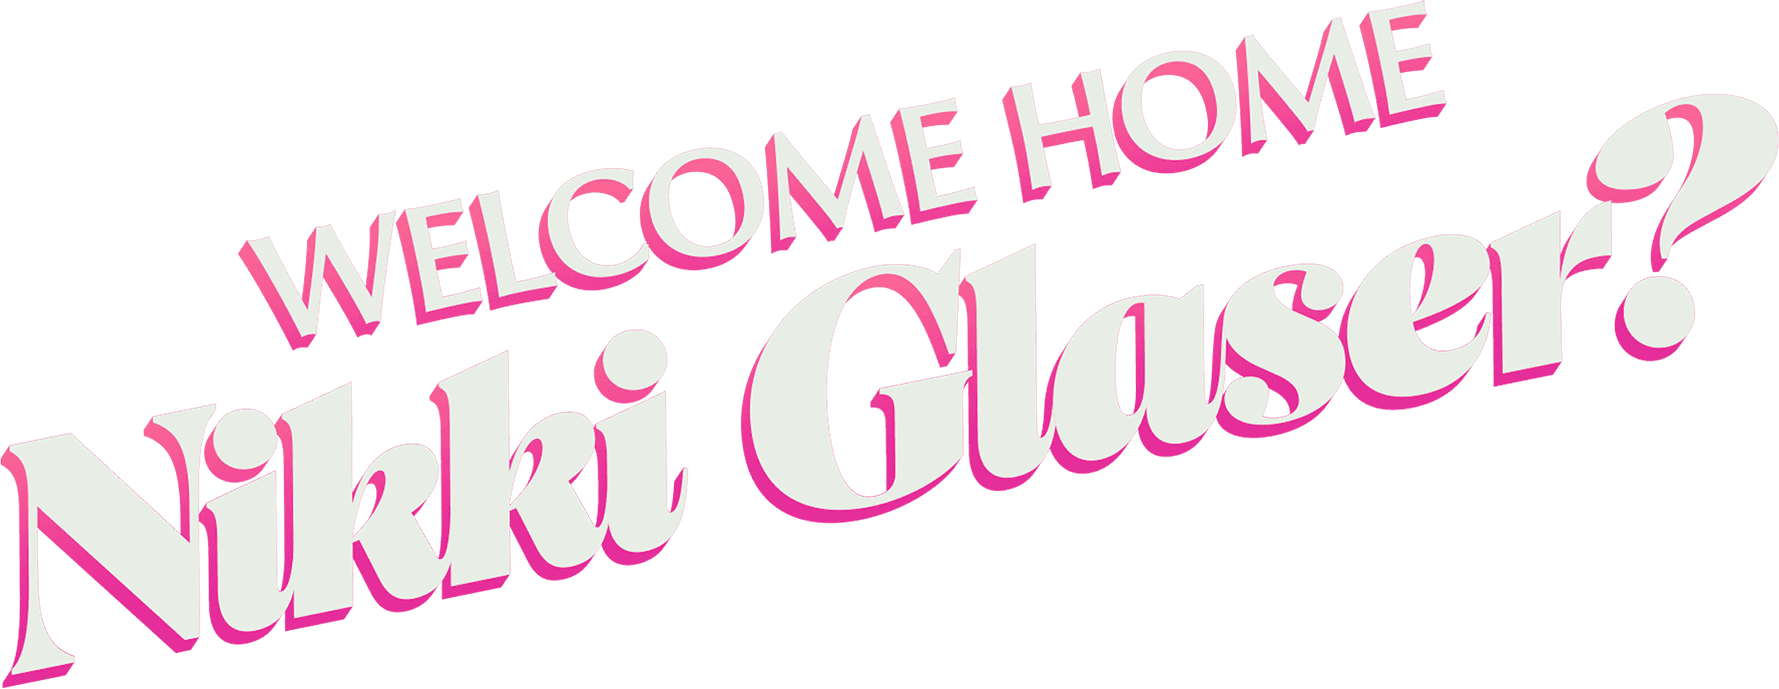 Welcome Home Nikki Glaser? logo